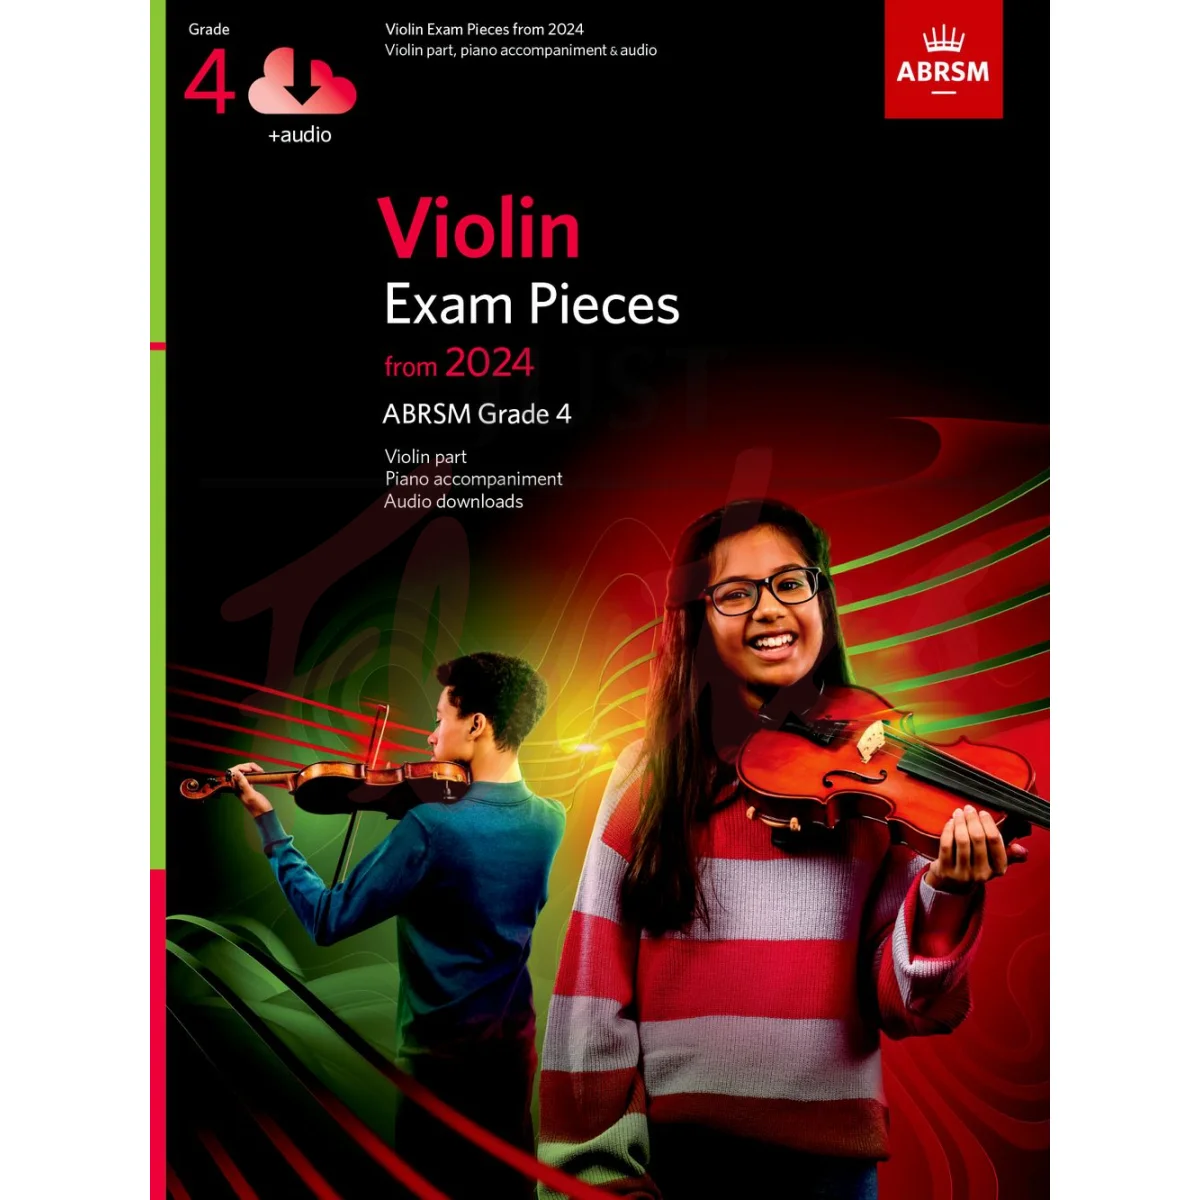 Violin Exam Pieces from 2024, Grade 4